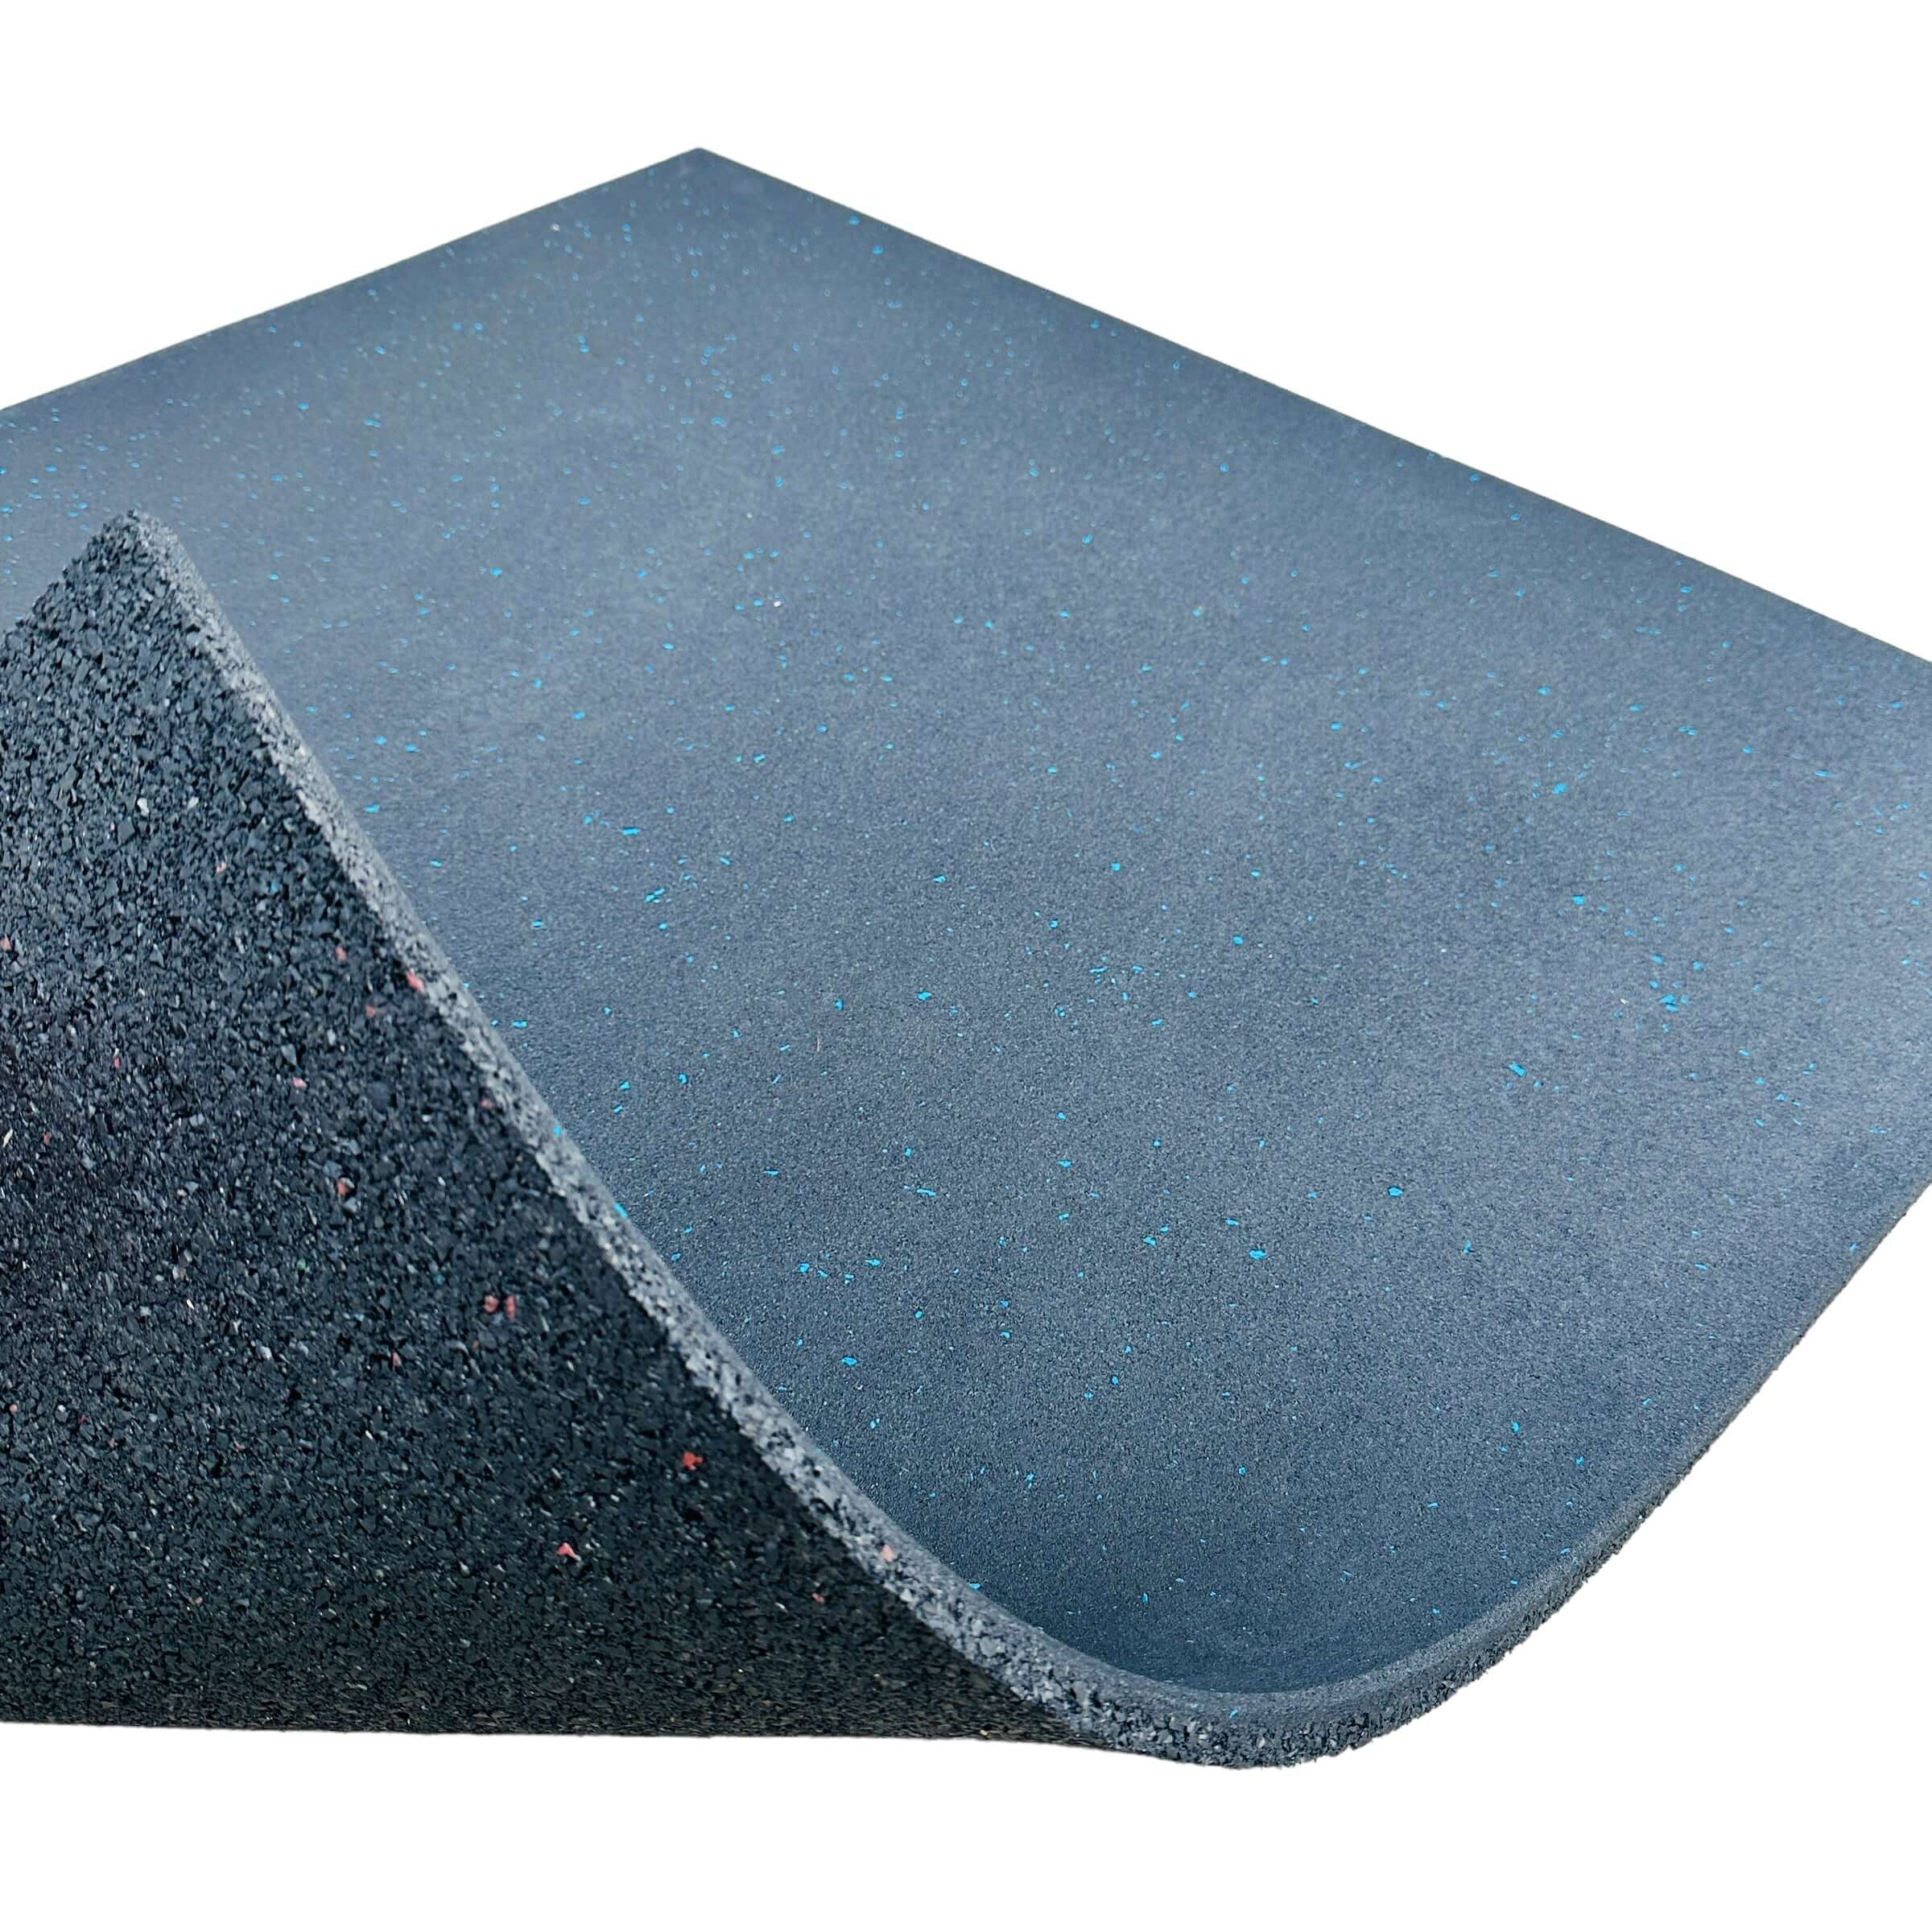 20 Pack 15mm Rubber Gym Flooring BLACK / BLUE Fleck Dense Tile Mat 1m x 1m | INSOURCE